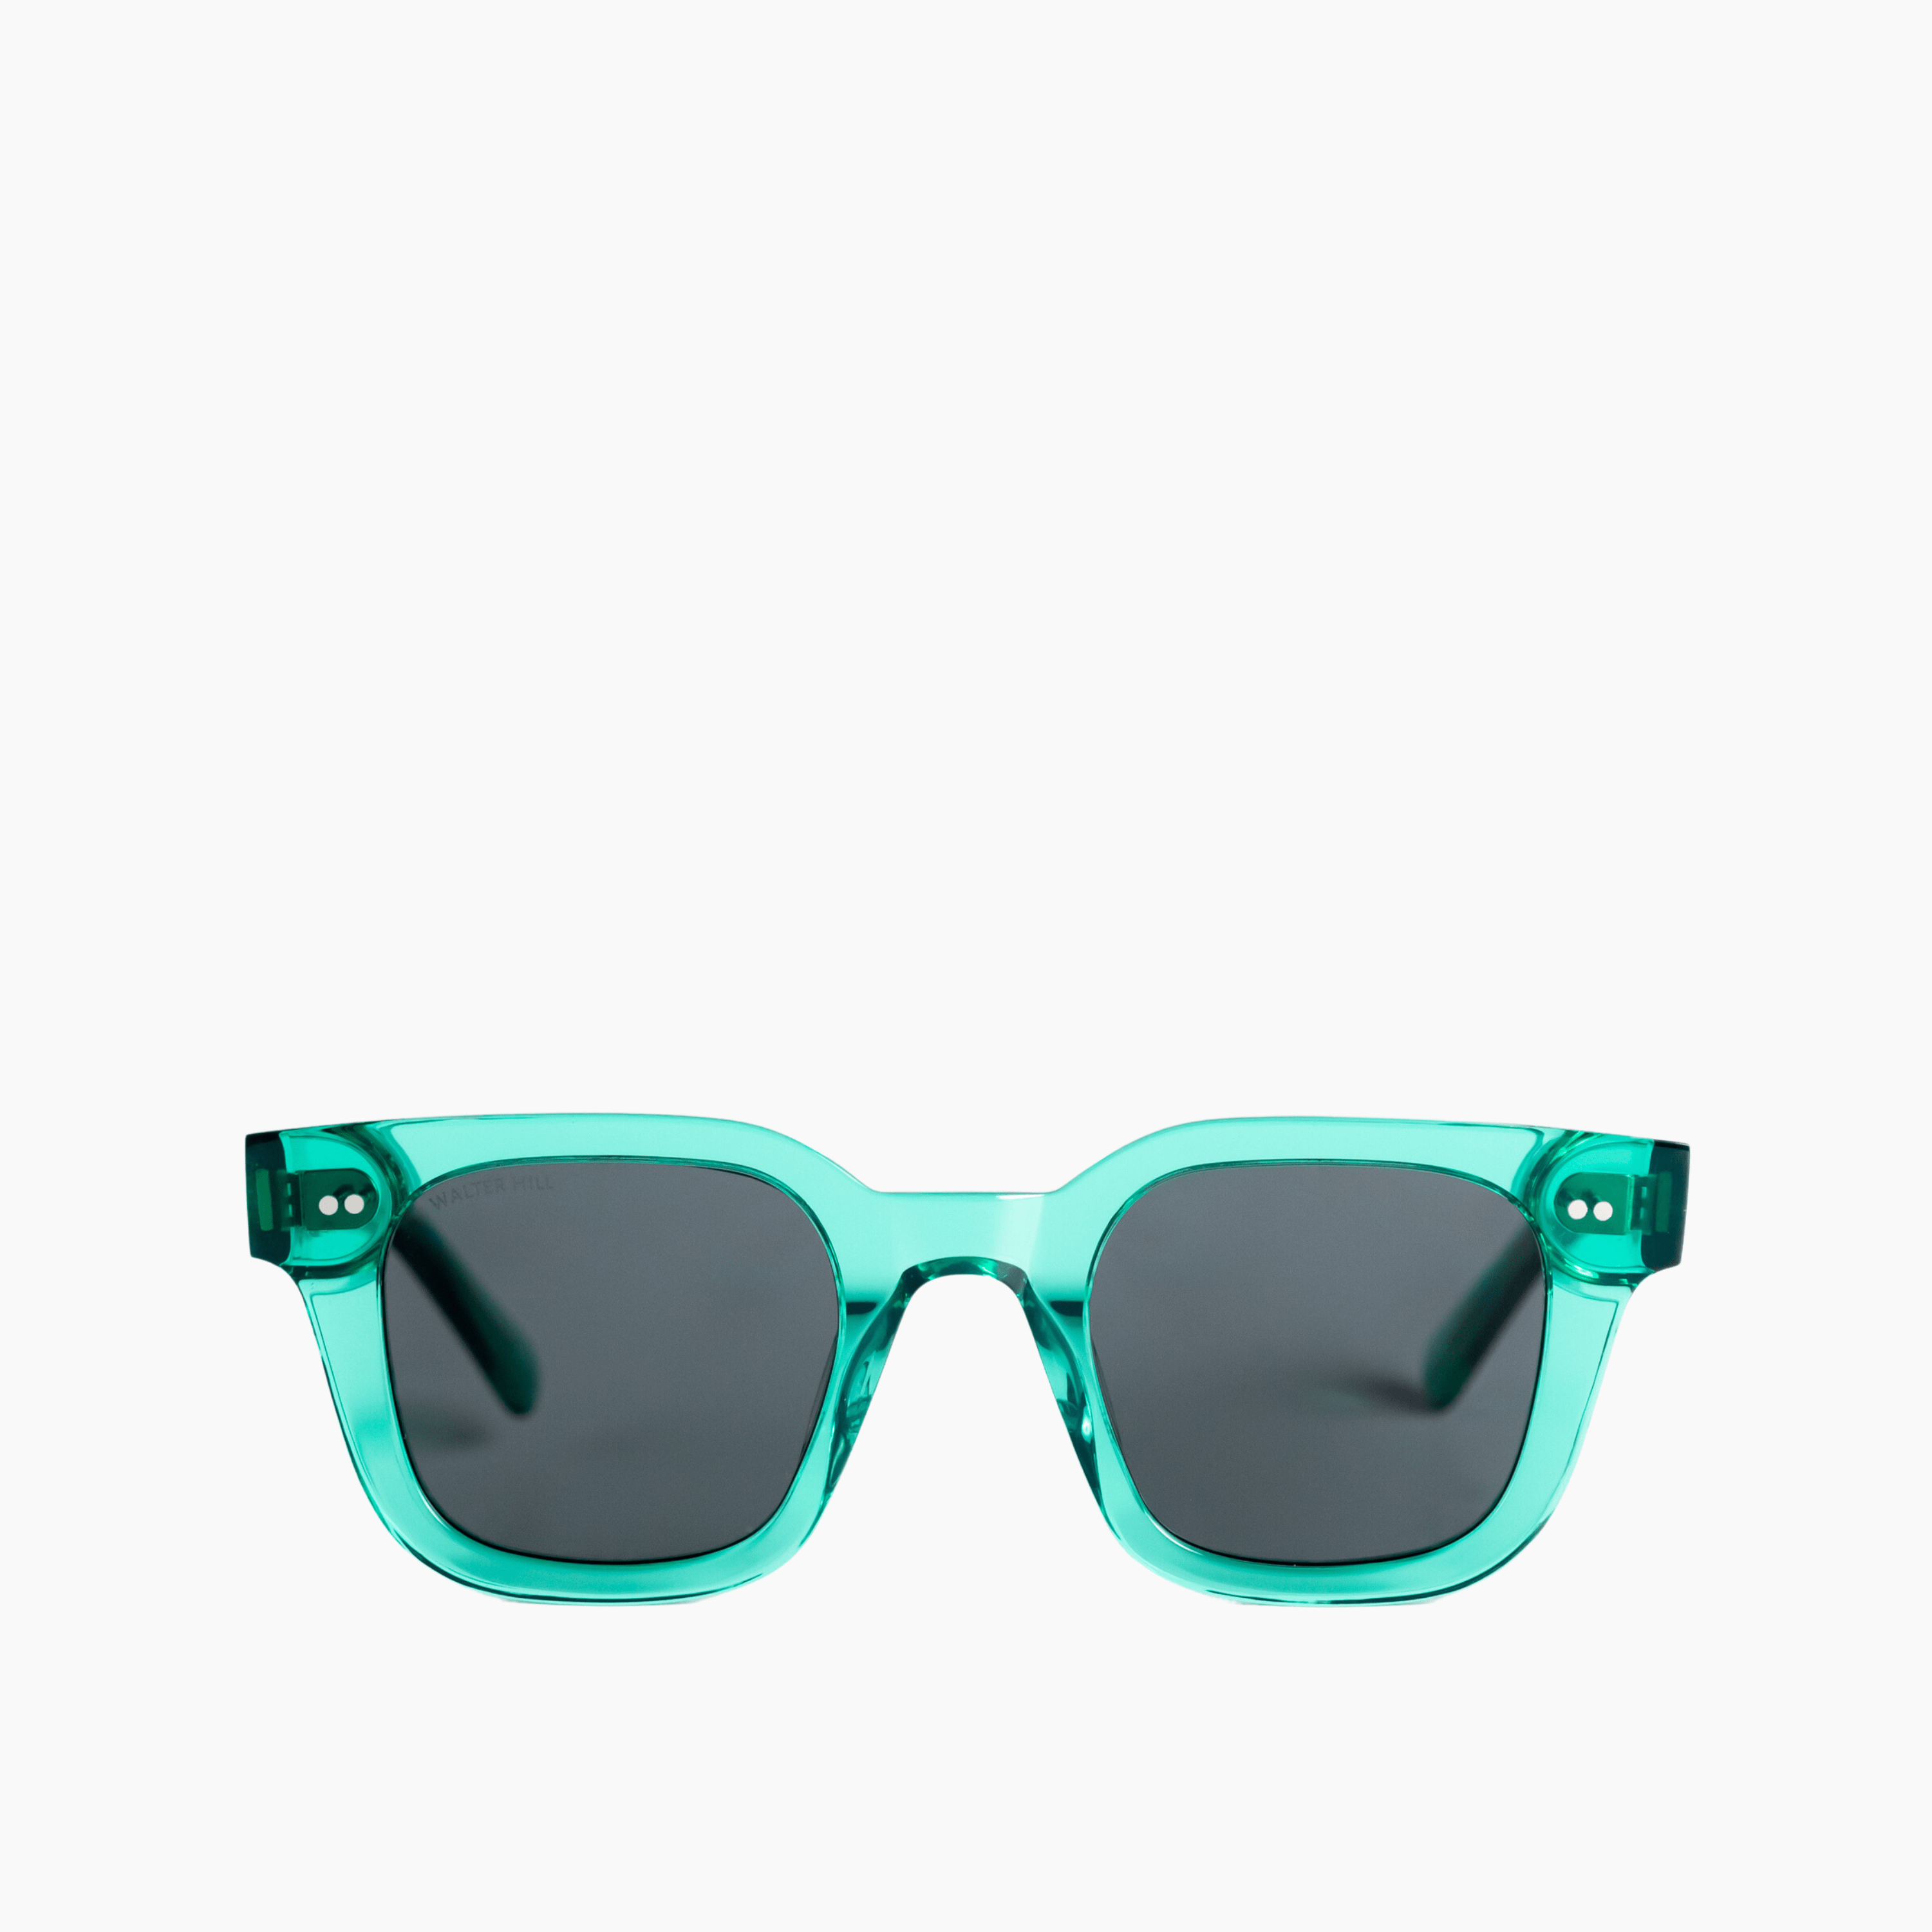 Walter Hill Sunglasses Ruby Red / Standard / Polarized Cat.3 XAVIER - Green